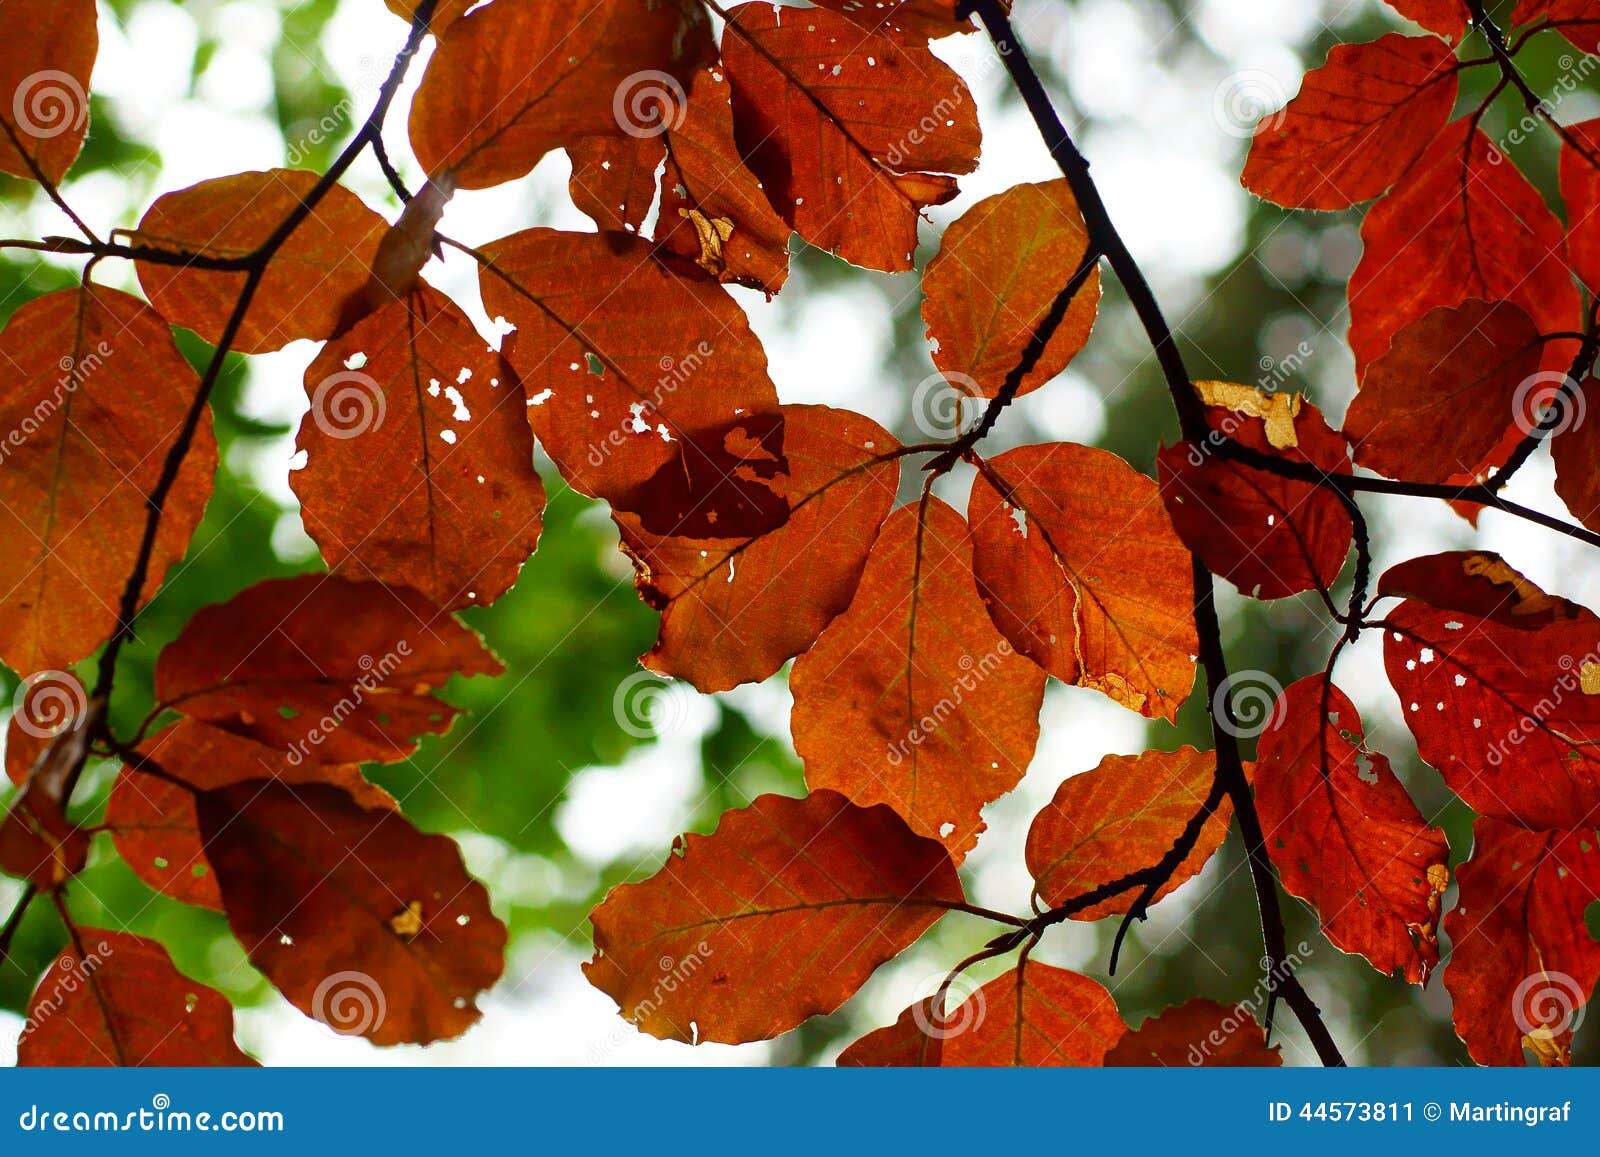 beech tree foliage coppery coloration fall season nature background